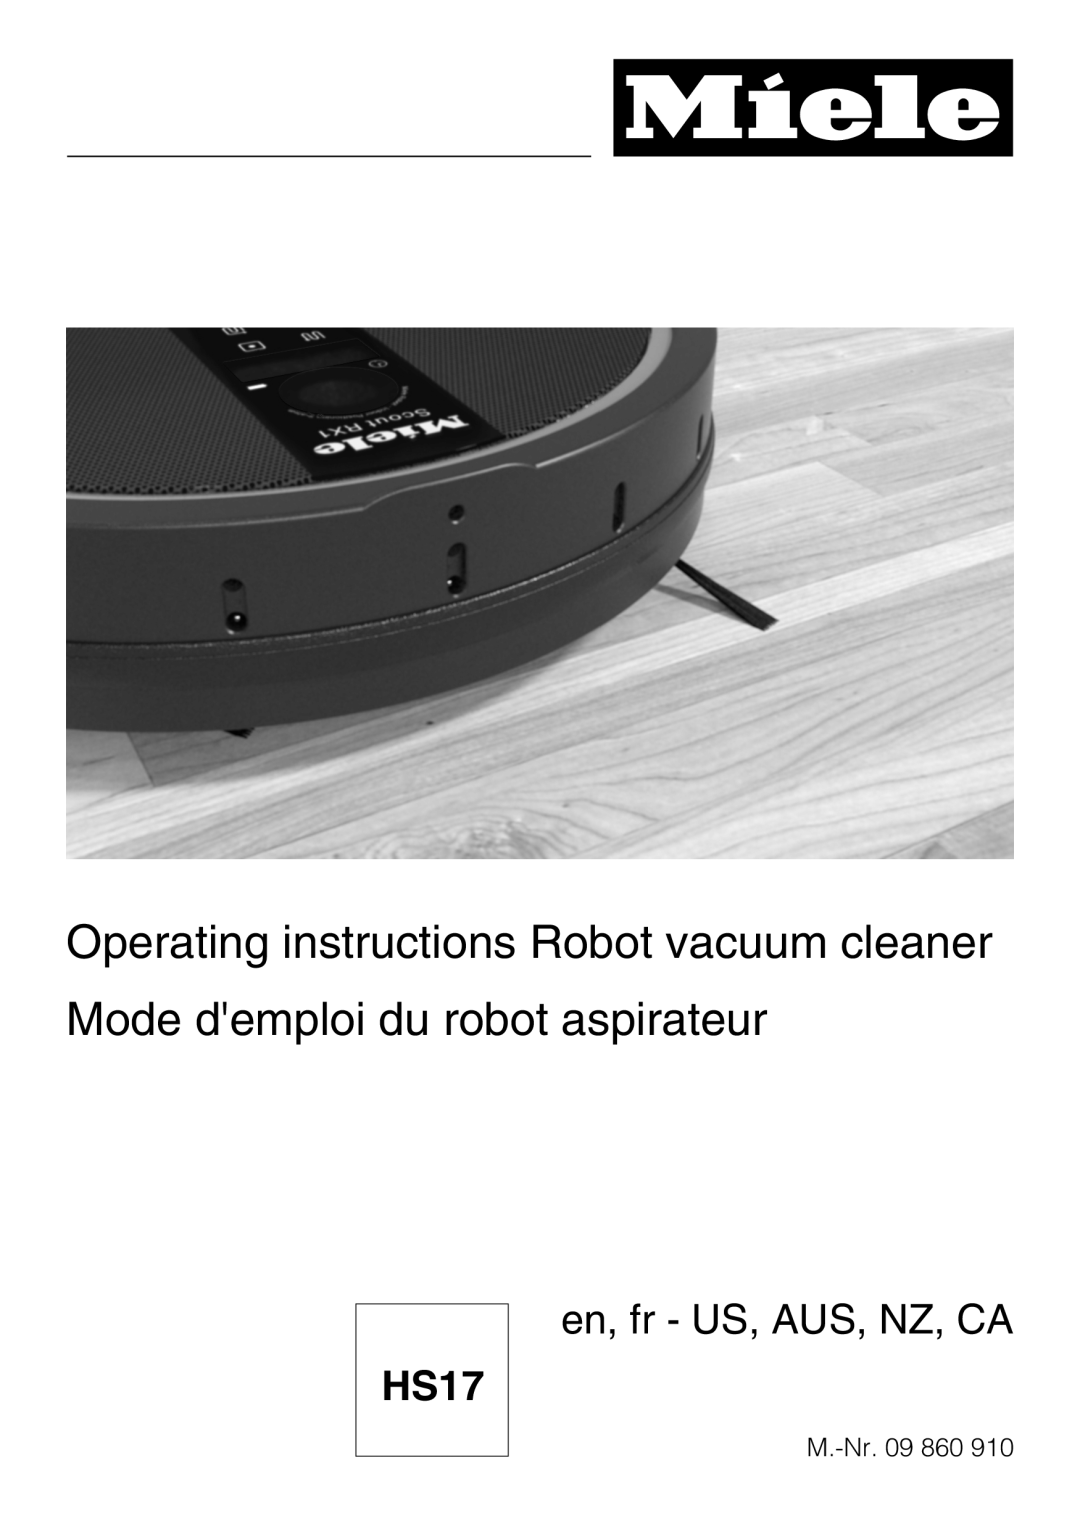 Miele HS17 manual Operating instructions Robot vacuum cleaner, Mode demploi du robot aspirateur, en, fr - US, AUS, NZ, CA 